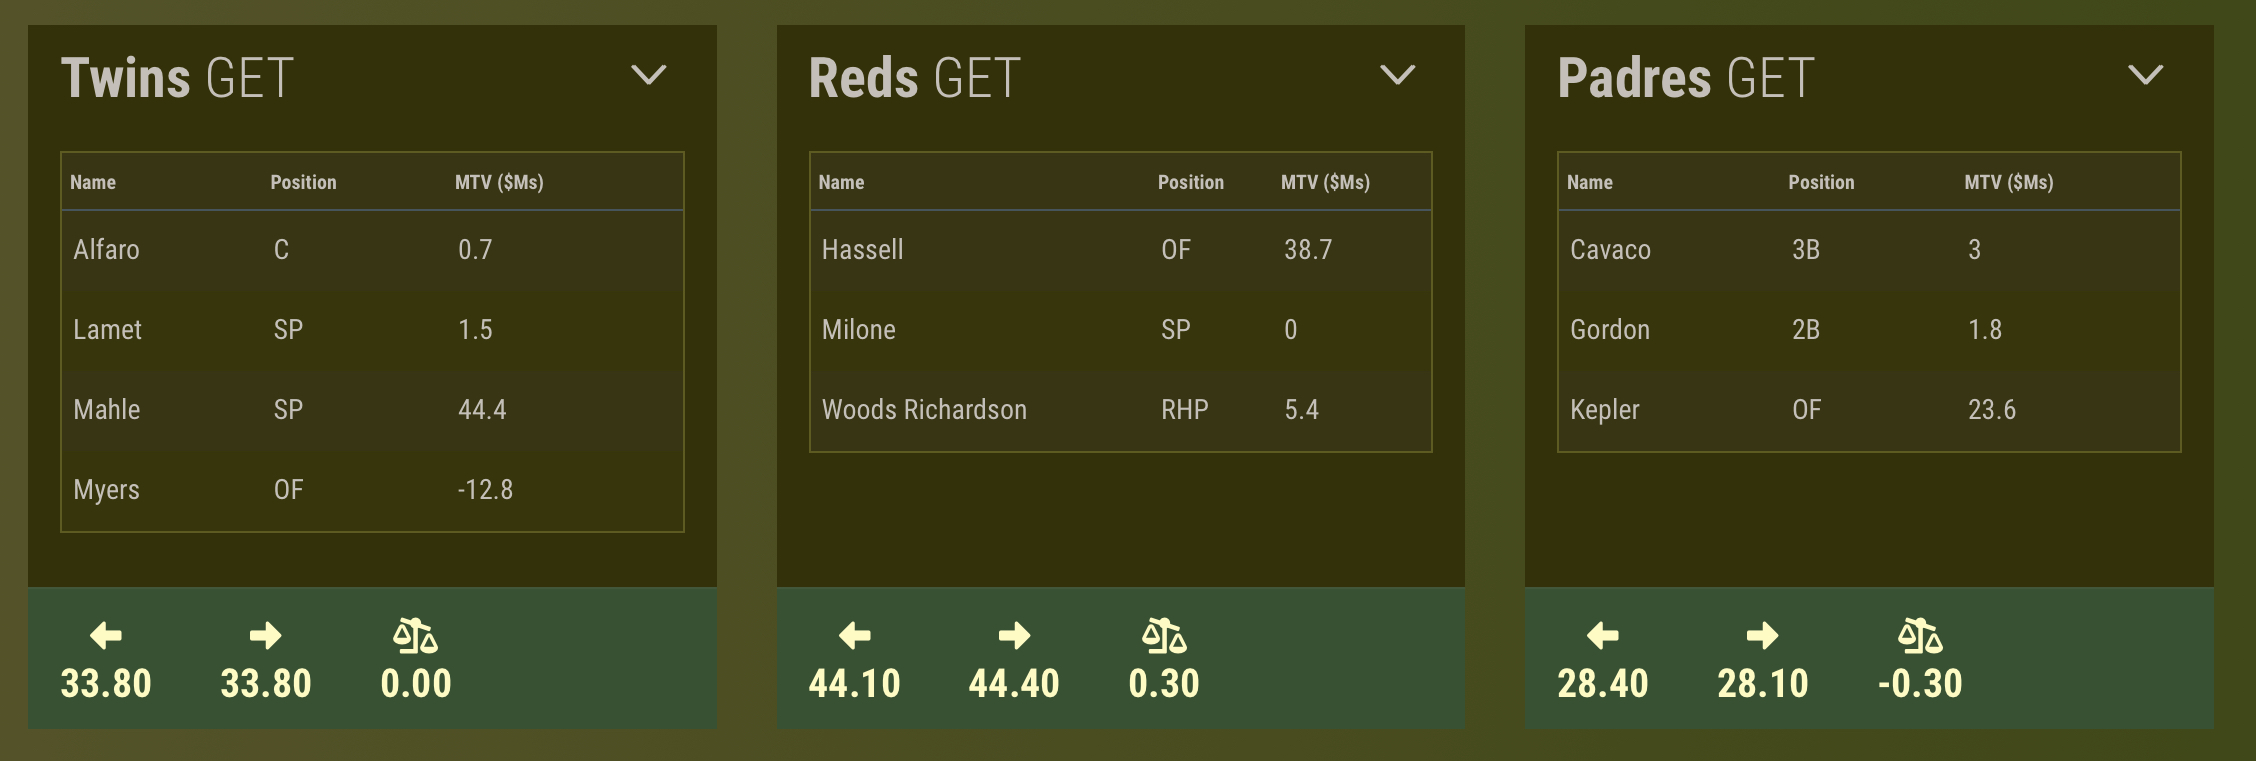 Twins-Reds-Padres trade